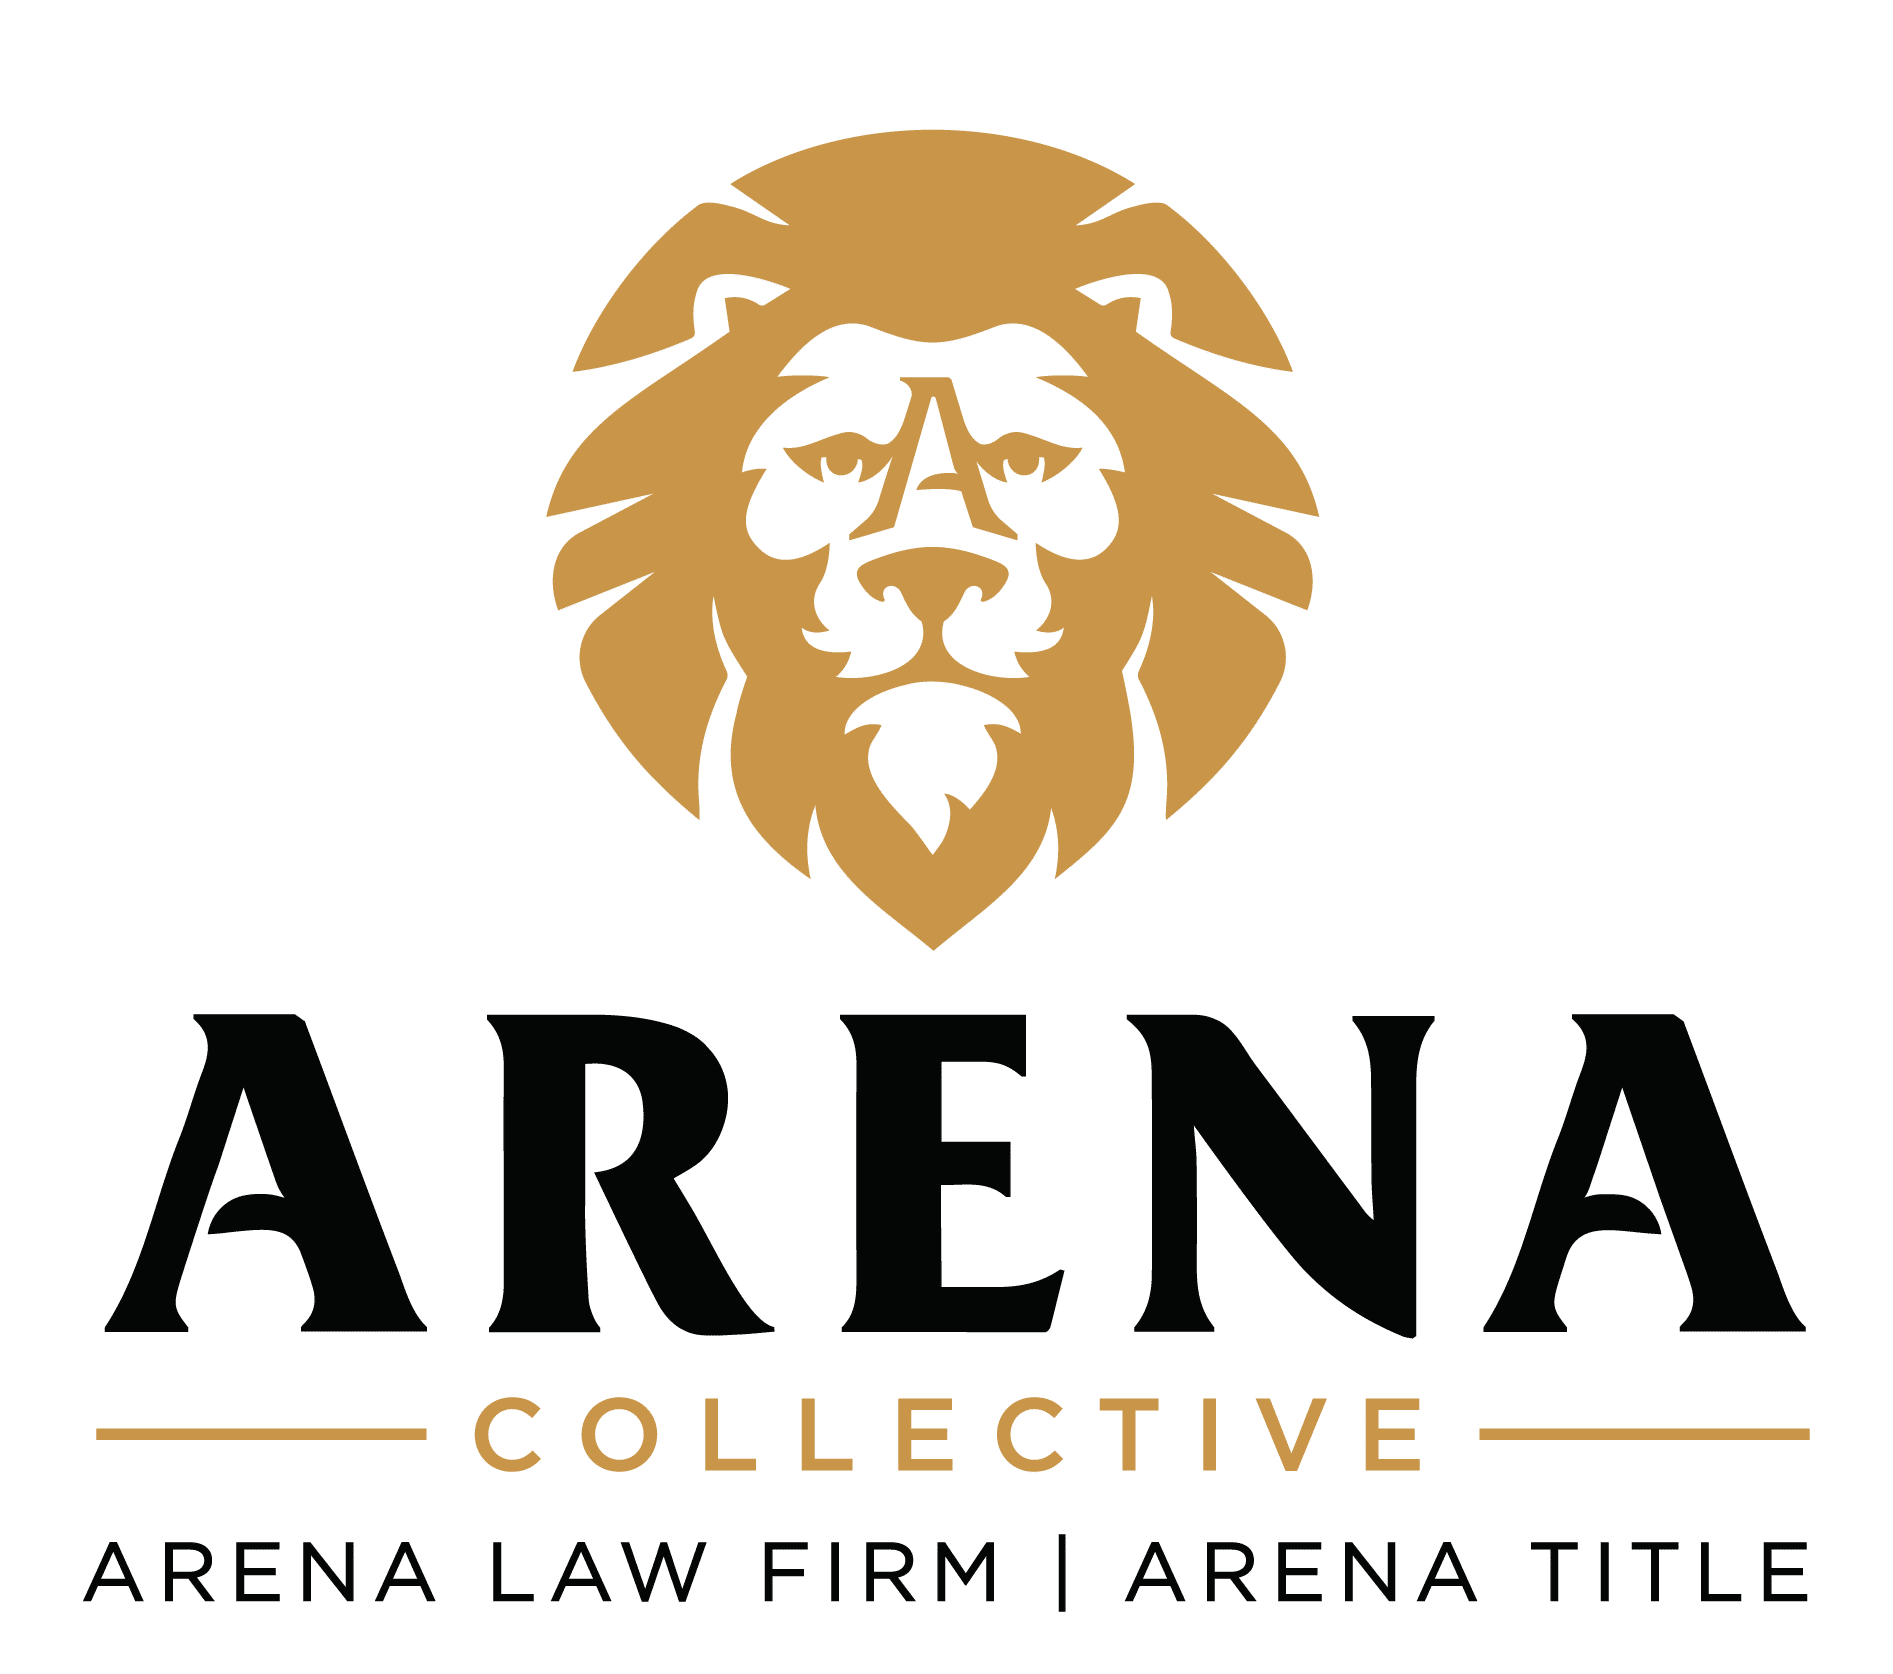 Arena title company